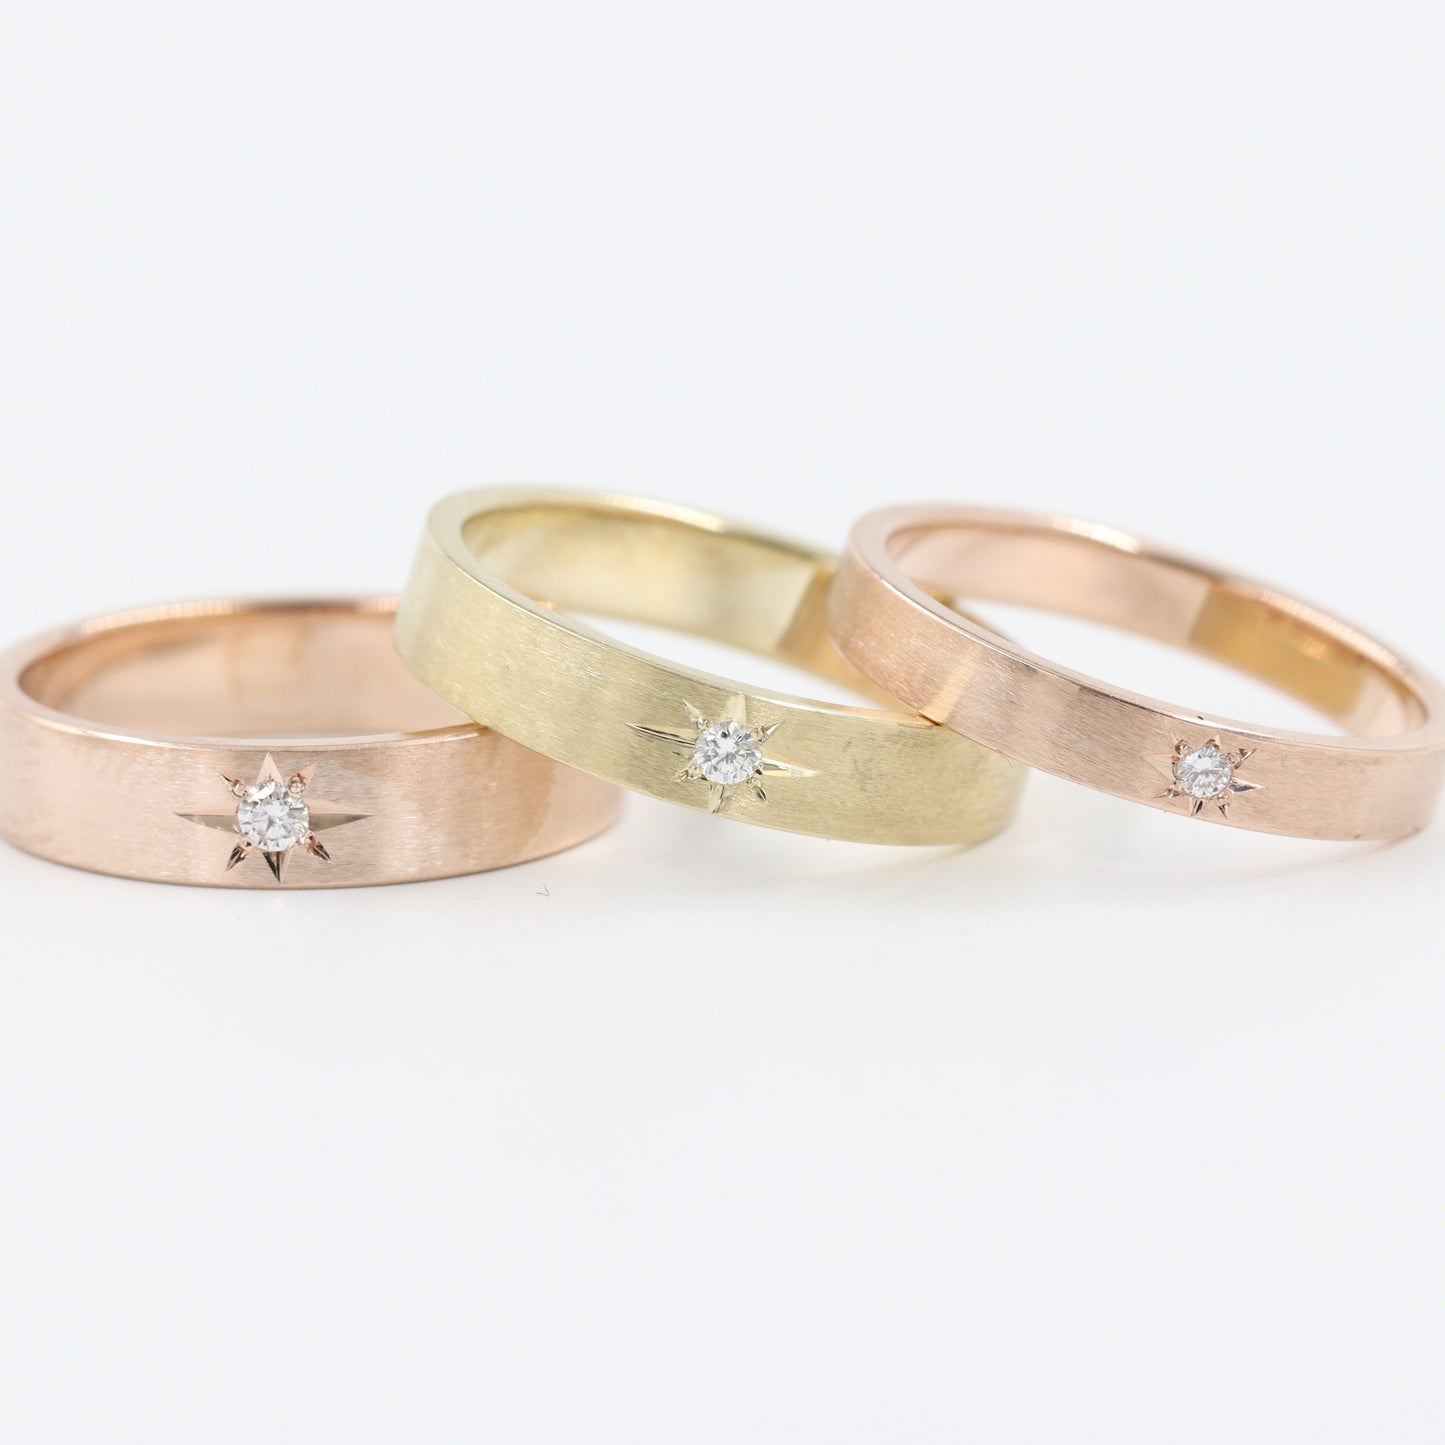 Polaris 1 Star Diamond Band/ High Polish or Sand/ 1 Star Diamond Wedding Ring/ 14K Star Ring/ 14K Polaris Flat Ring/ Width 3mm